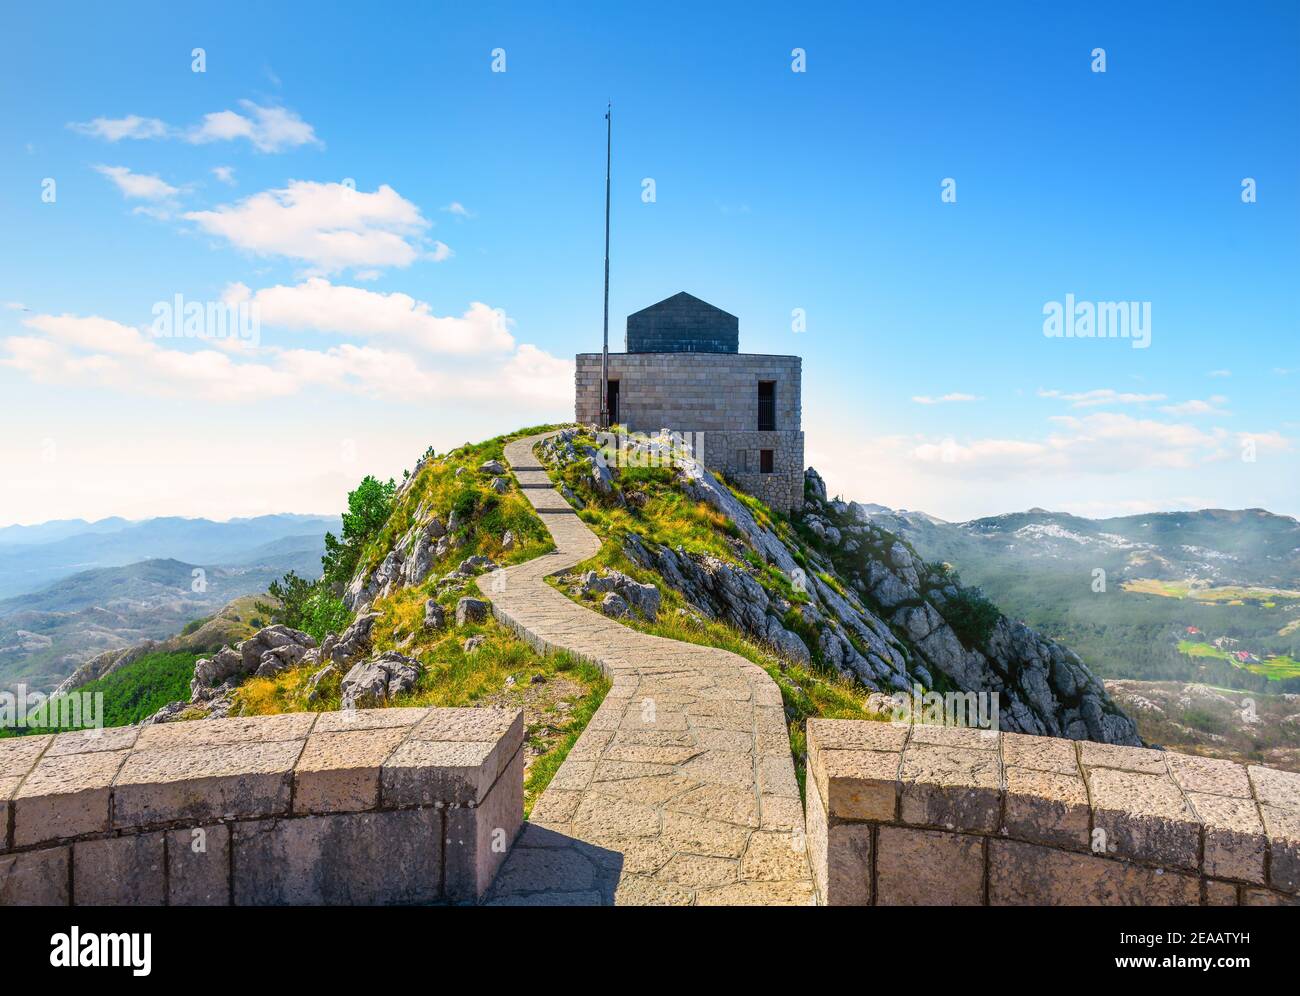 Petar petrovic njegos mausoleum hi-res stock photography and images - Alamy